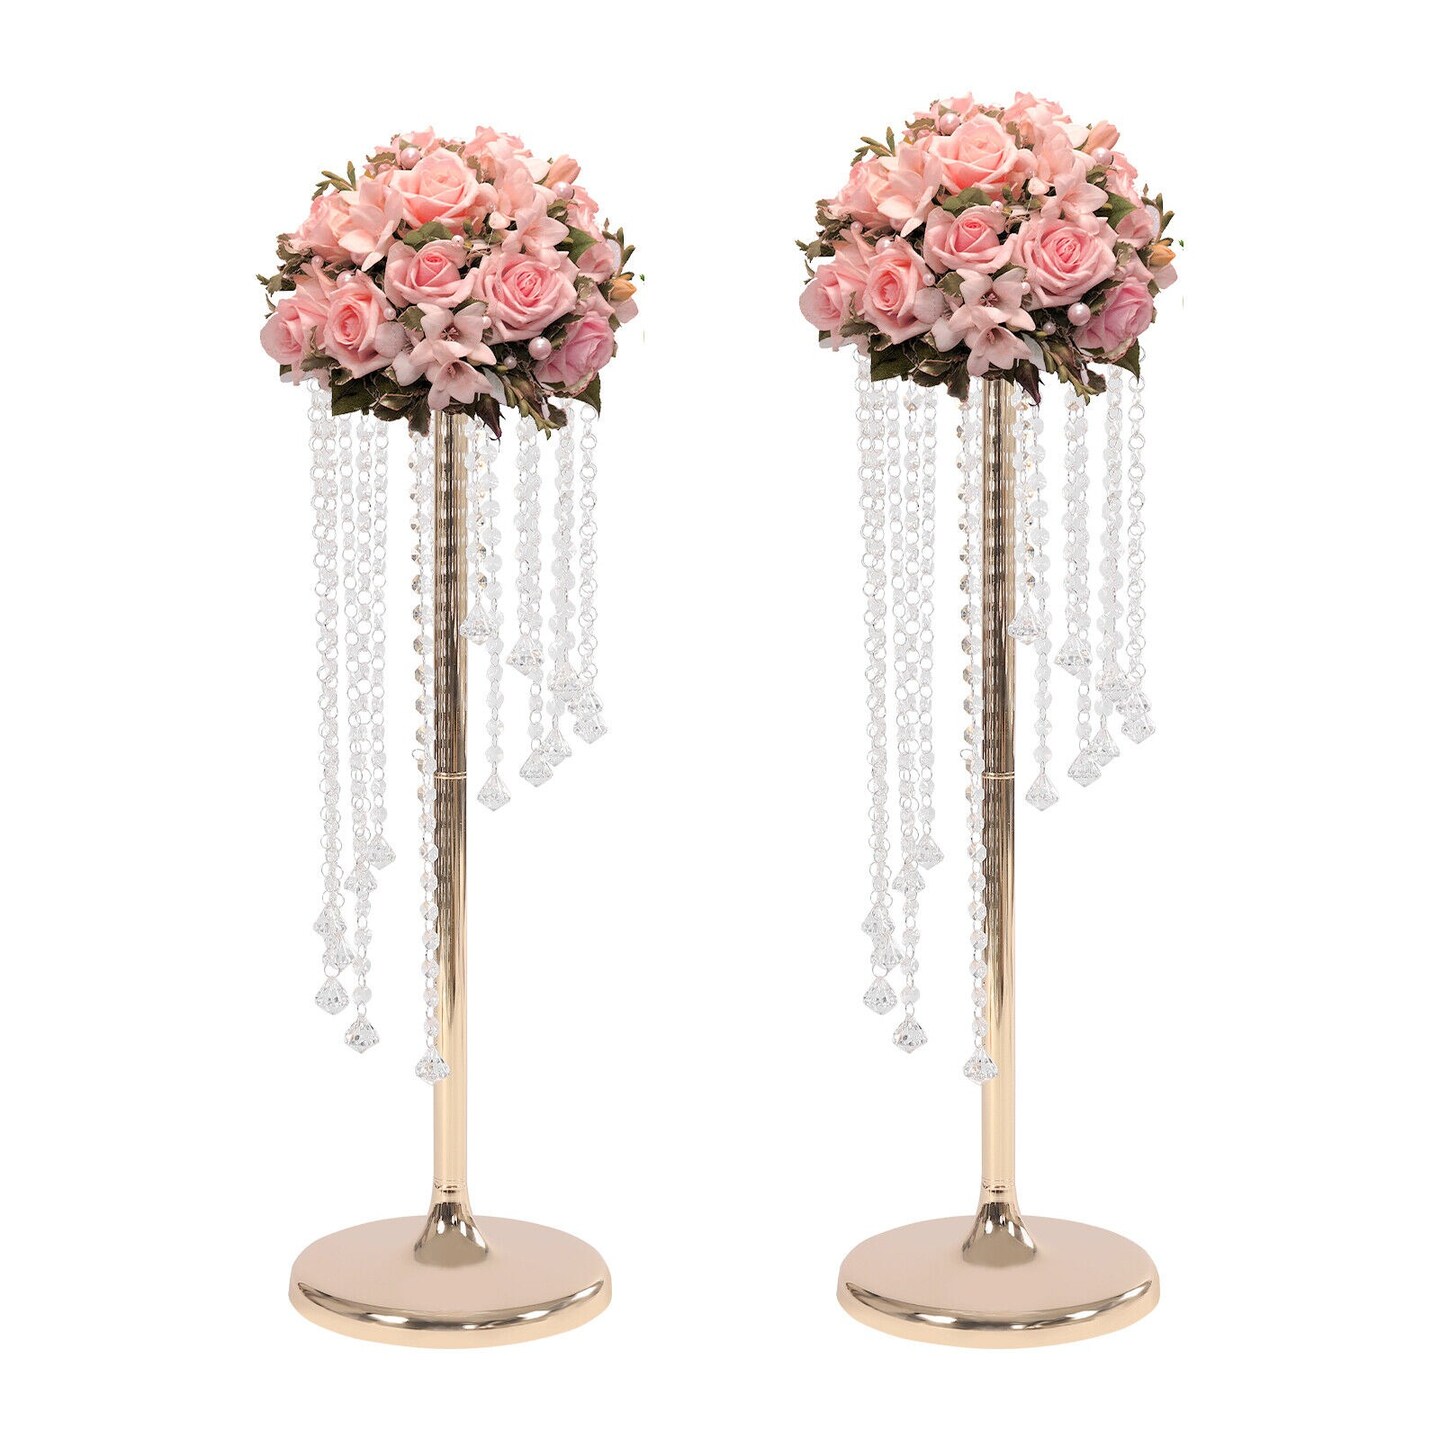 2Pcs Tall Wedding Centerpieces Decorative Flower Vases Crystal Display Rack